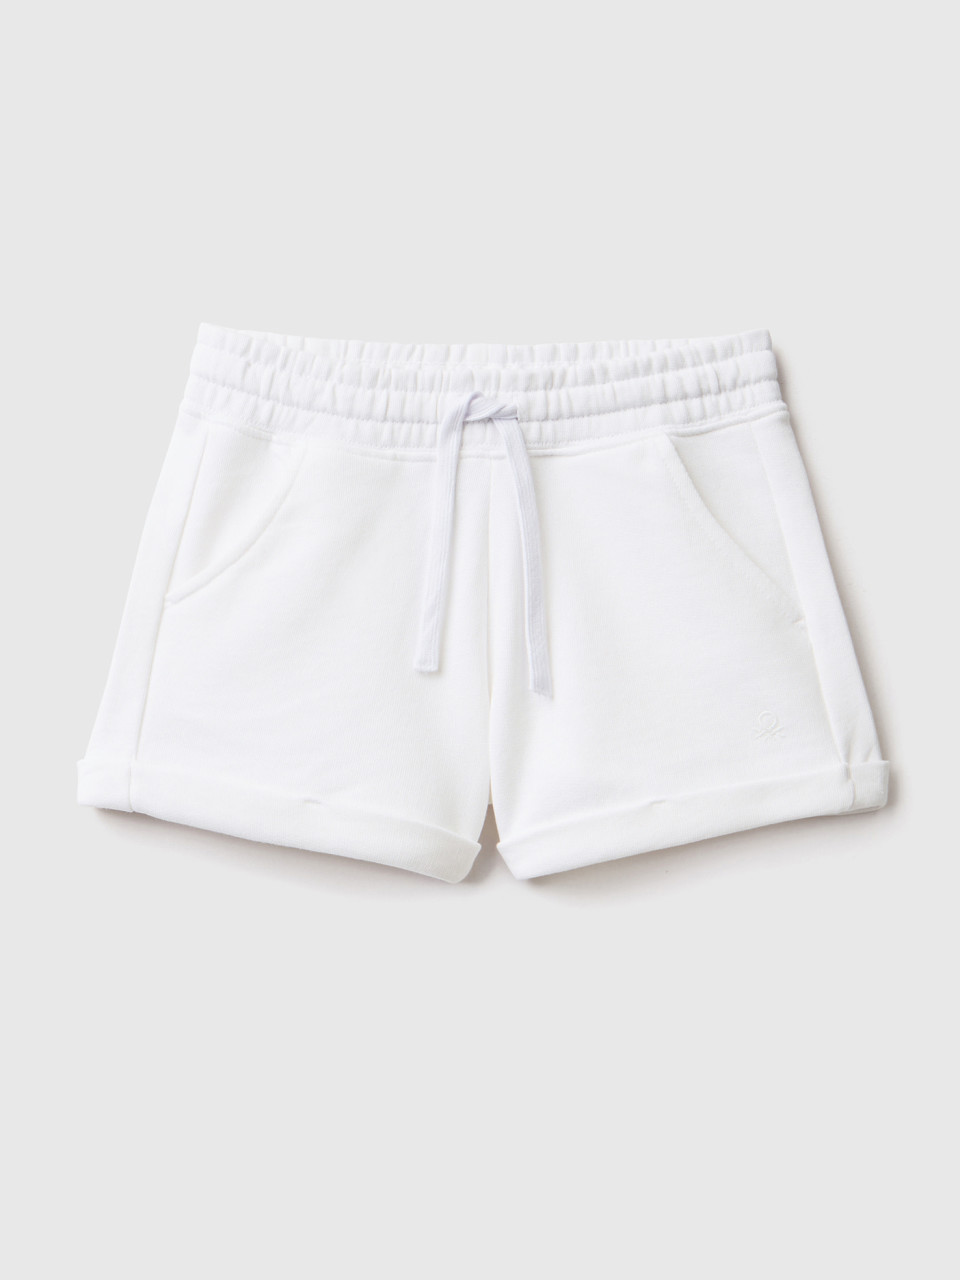 Benetton, 100% Cotton Sweat Shorts, White, Kids